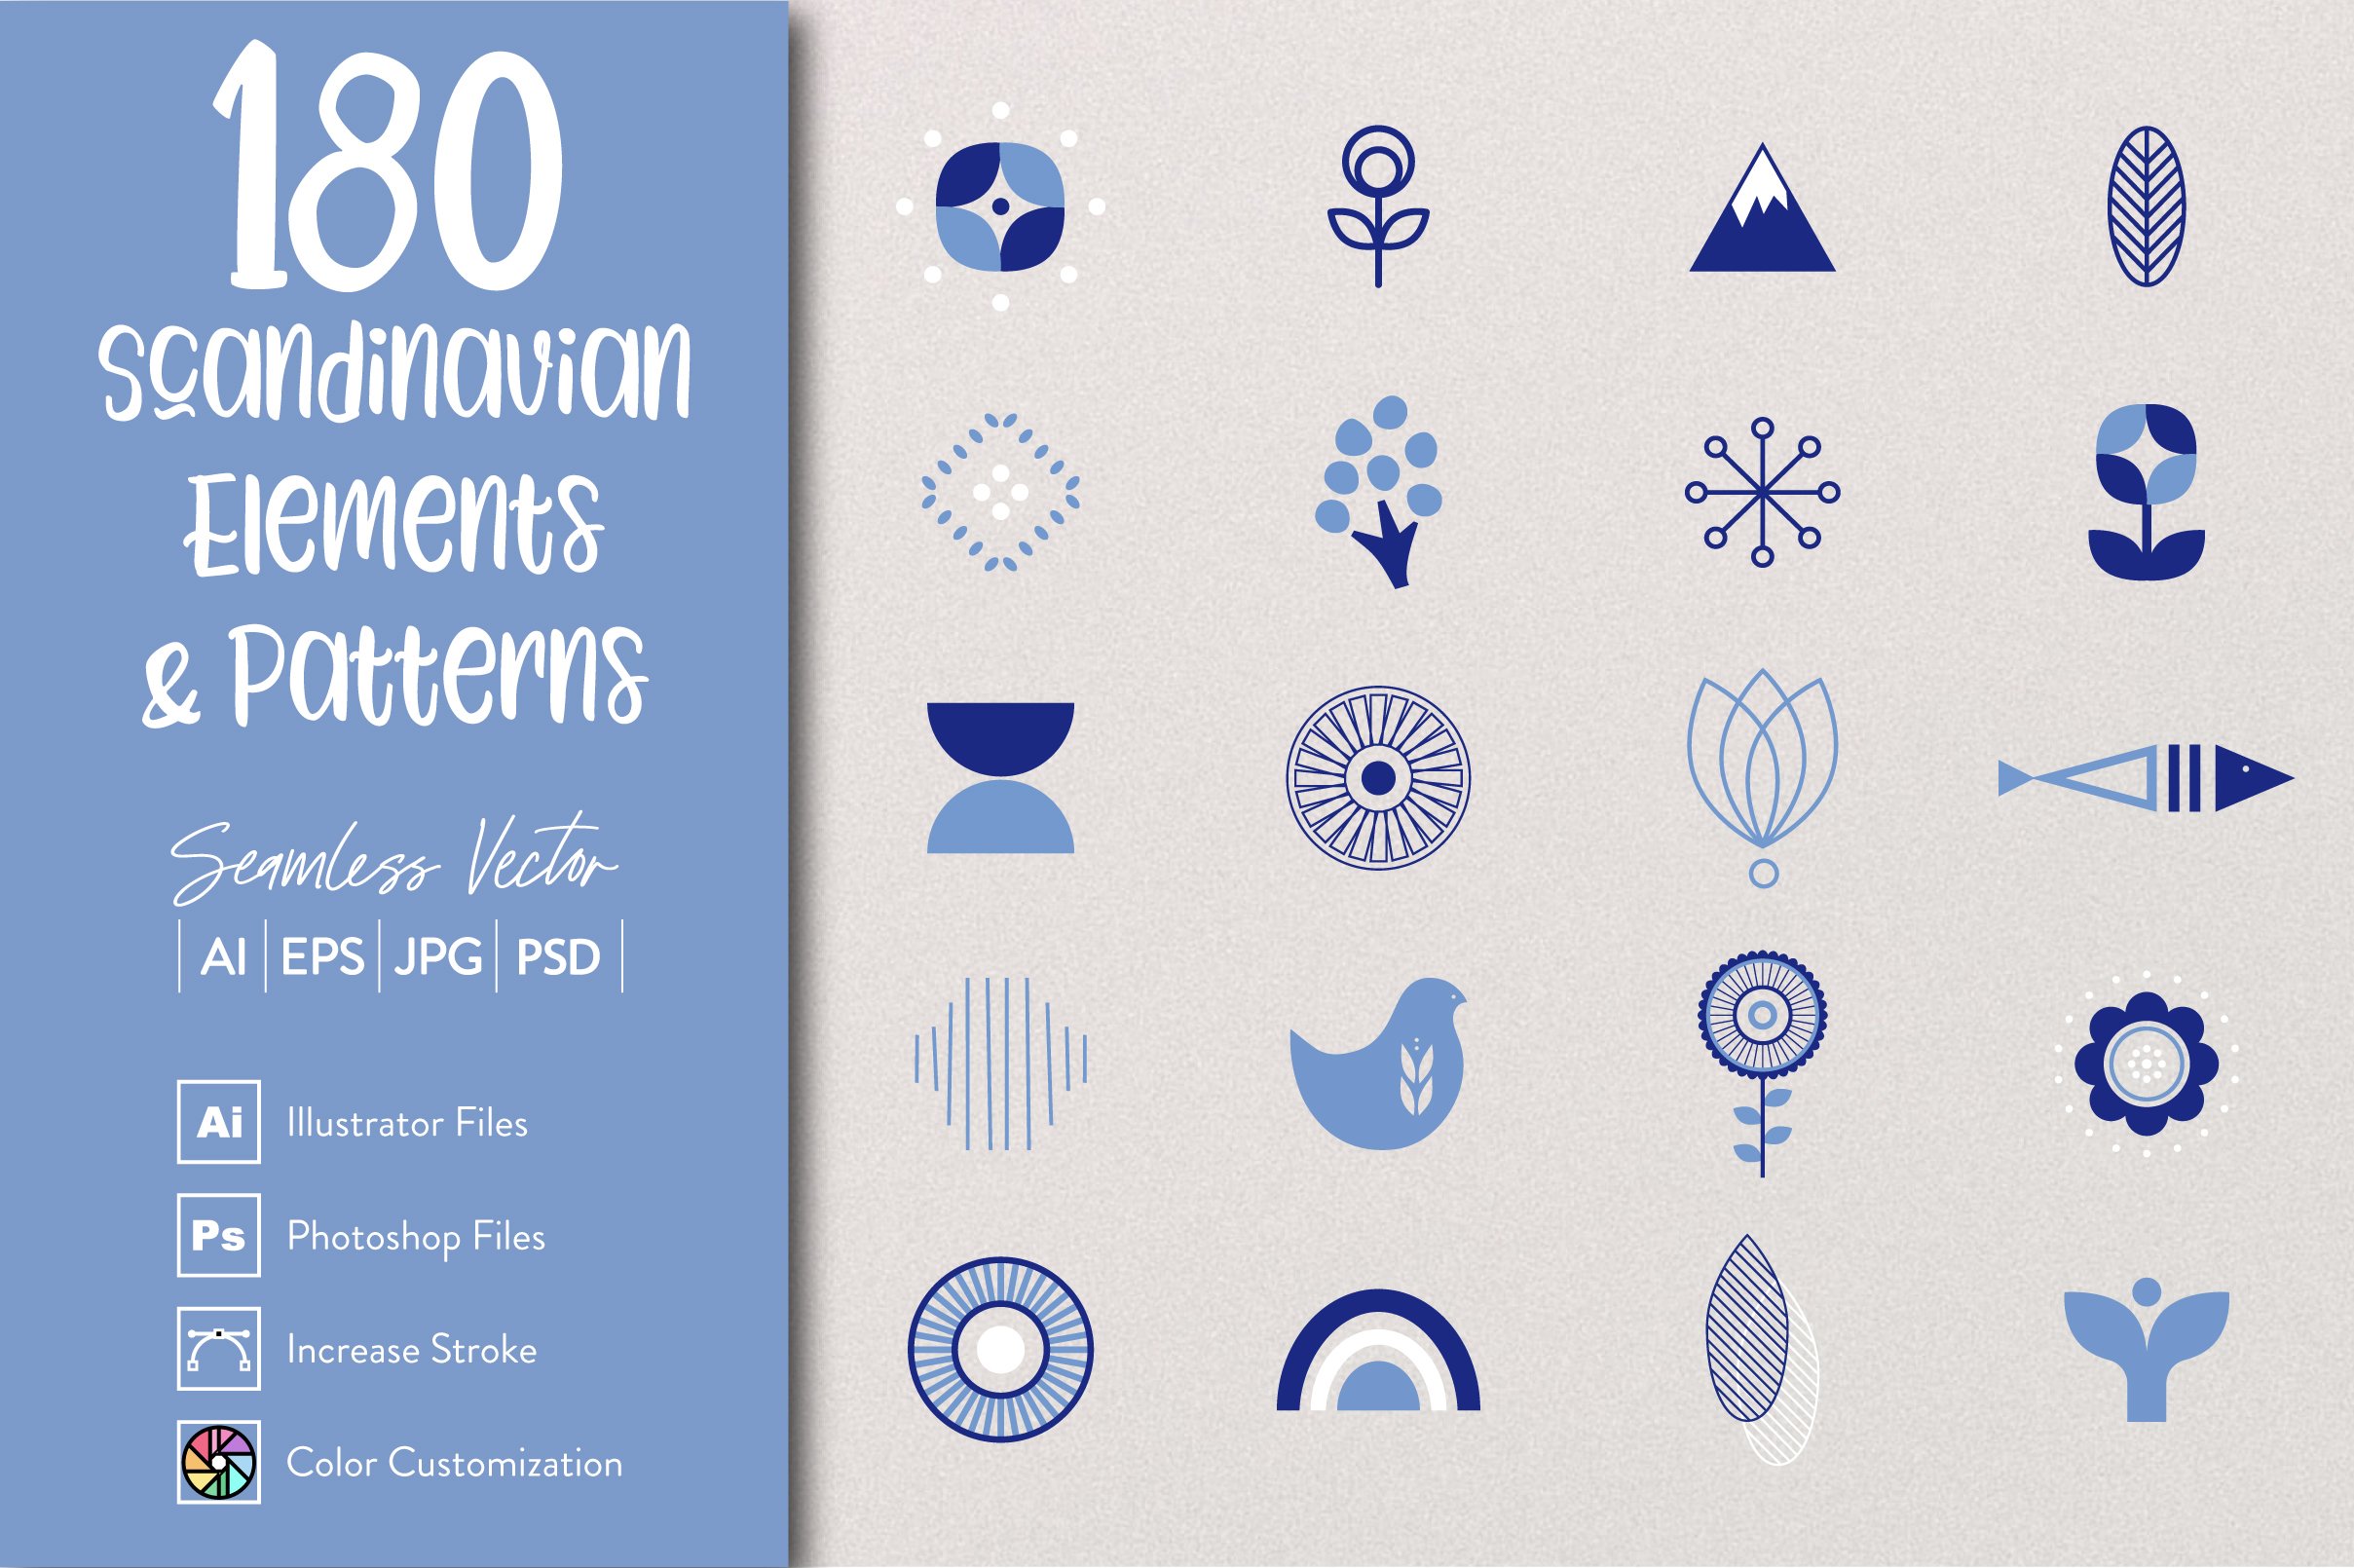 180 Scandinavian Patterns Bundle cover image.